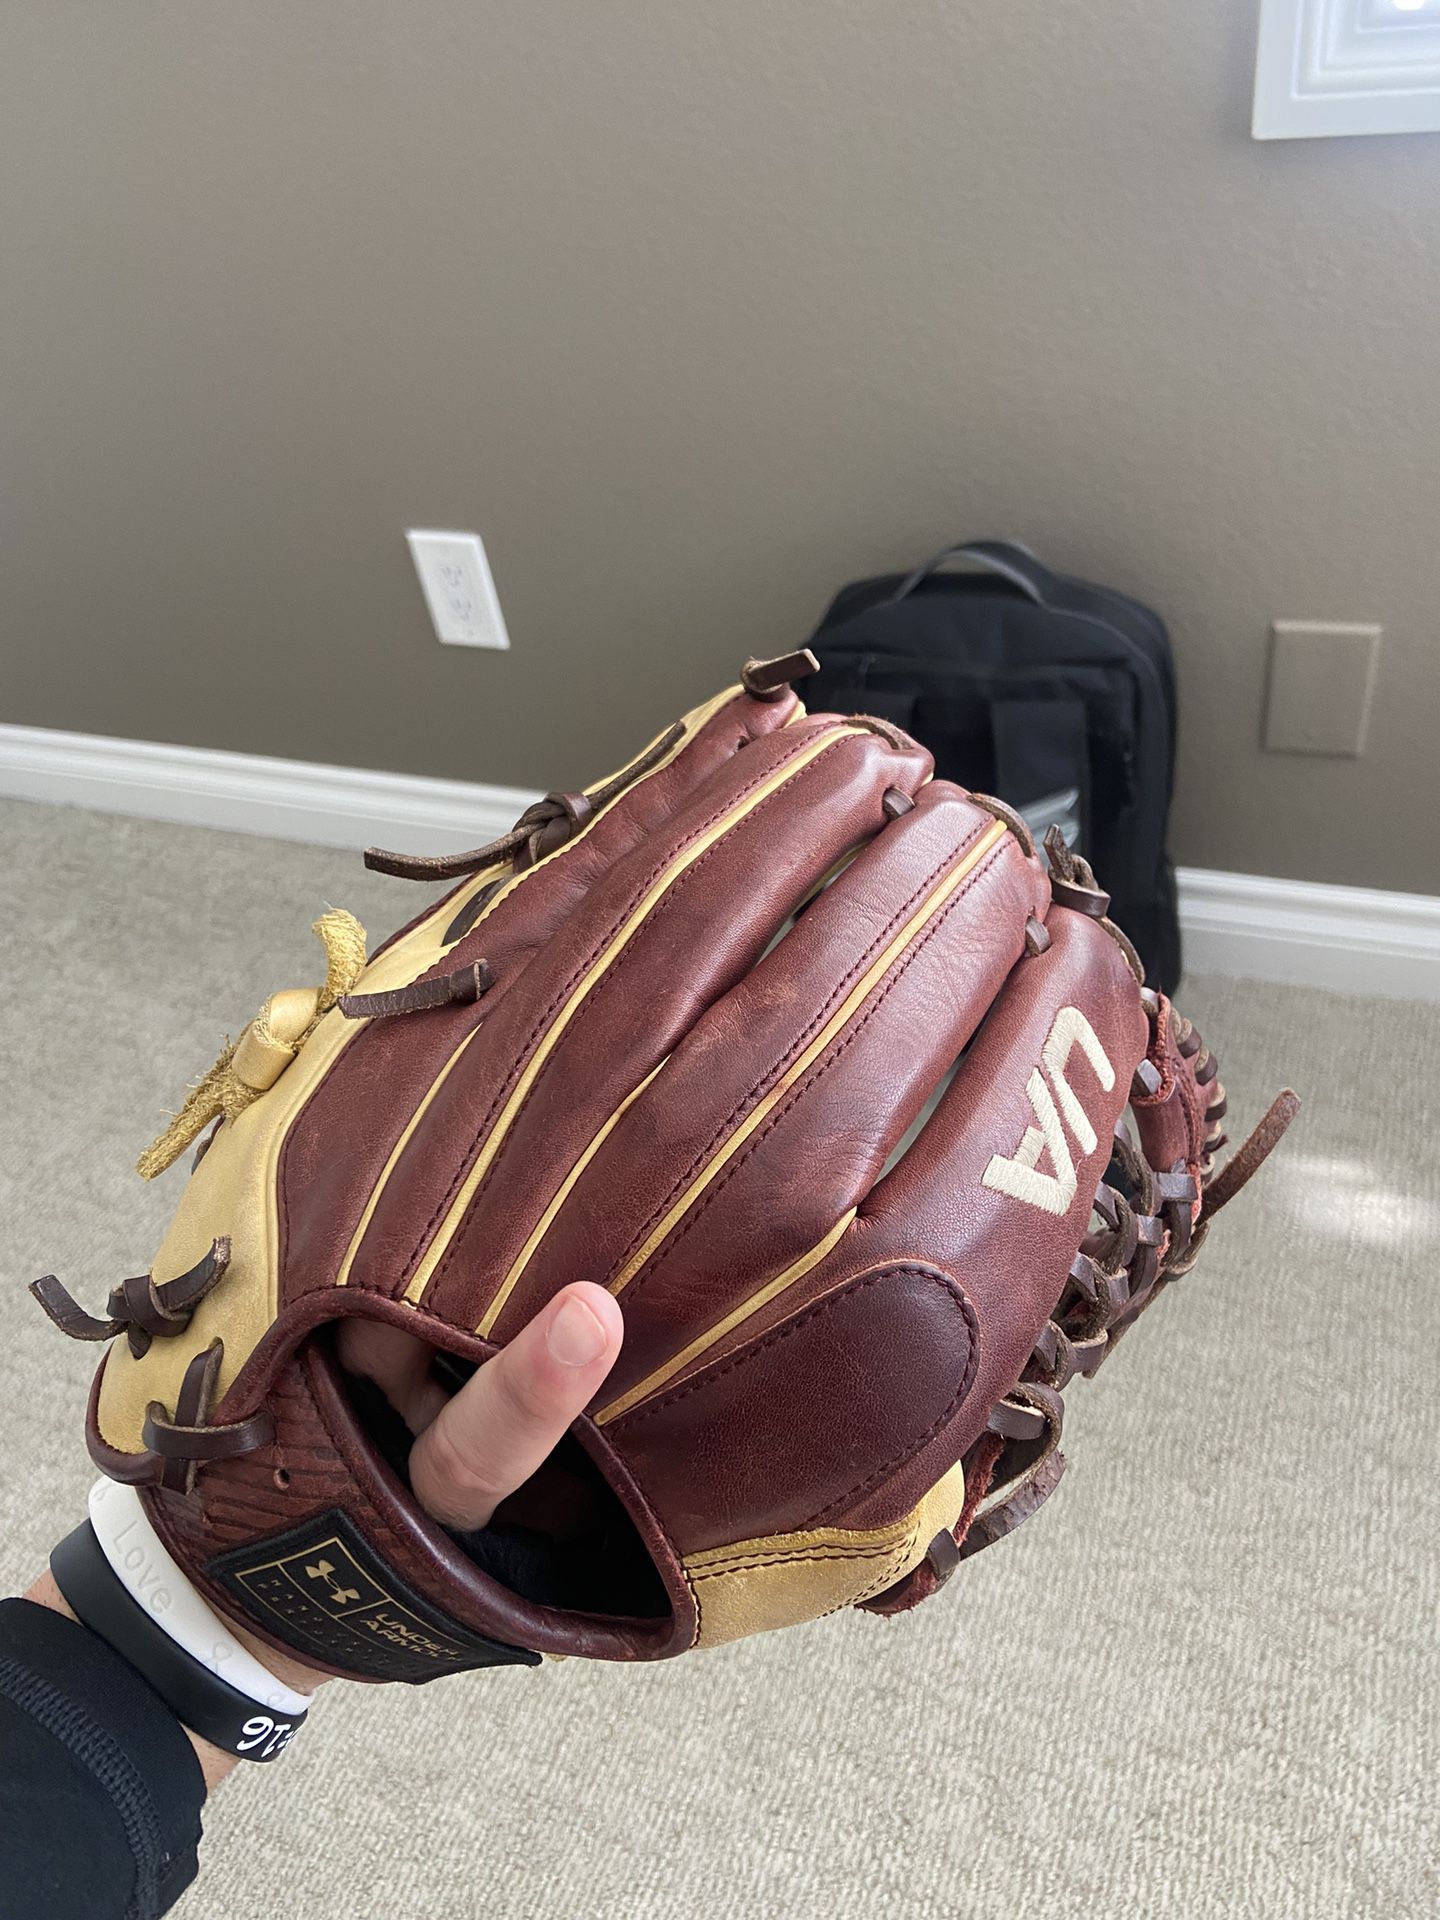 11 3/4 Under Armour baseball glove 